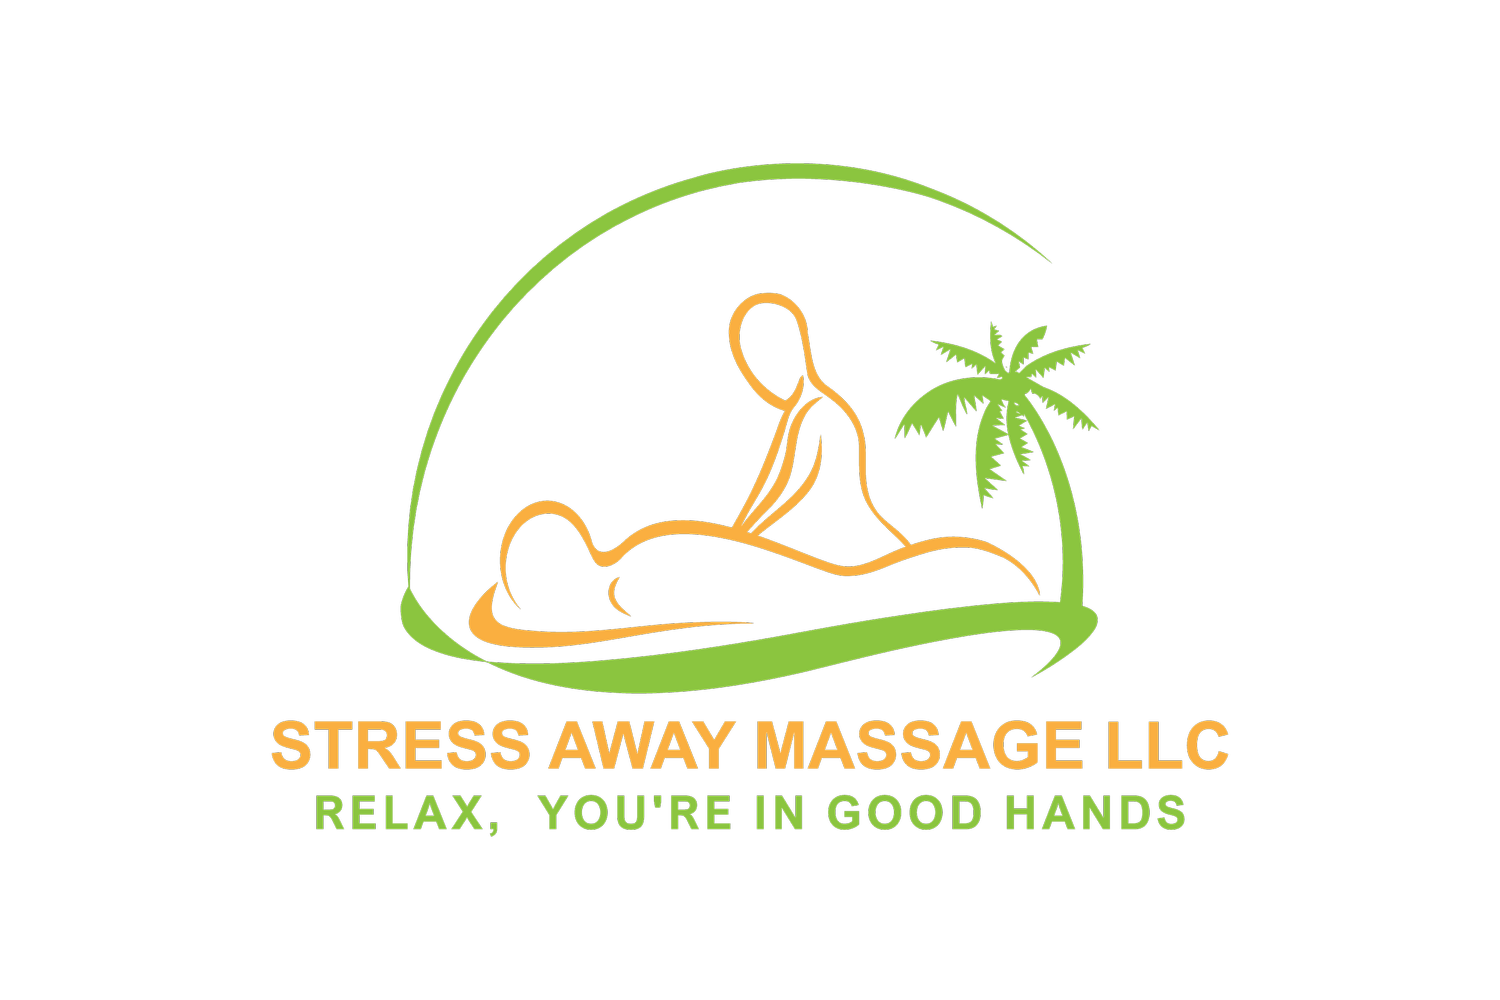 STRESS AWAY MASSAGE LLC